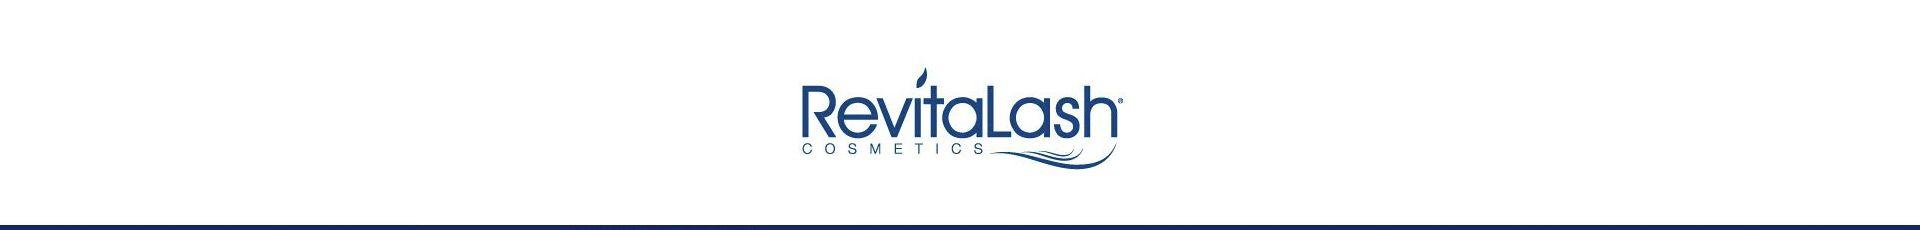 Revitalash Logo - RevitaLash NZ Retailer Overnight Delivery